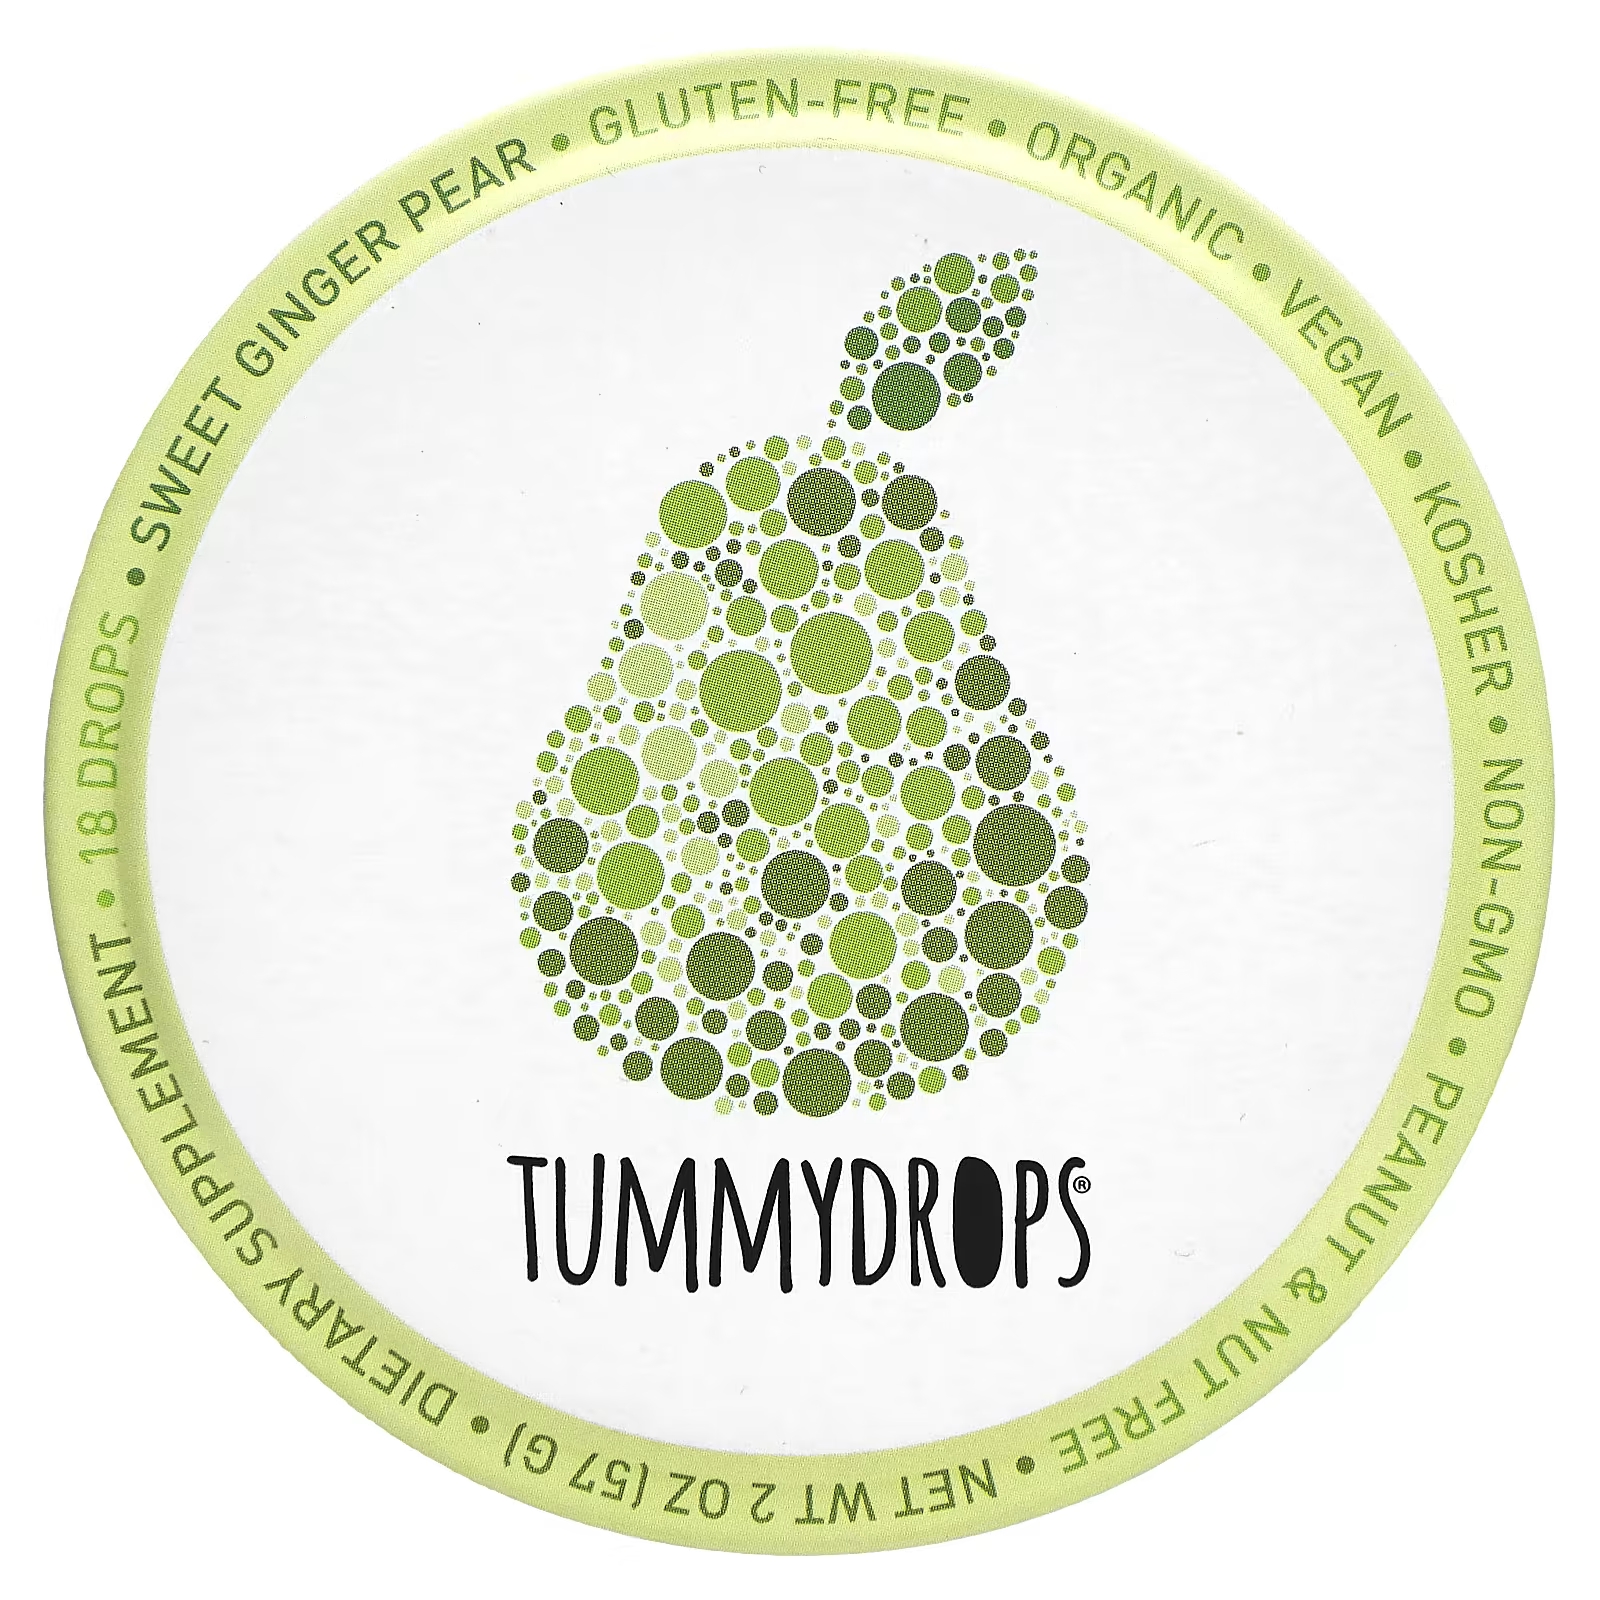 Капли Tummydrops сладкий имбирь и груша, 18 капель tummydrops tummypops органический имбирь 21 шт